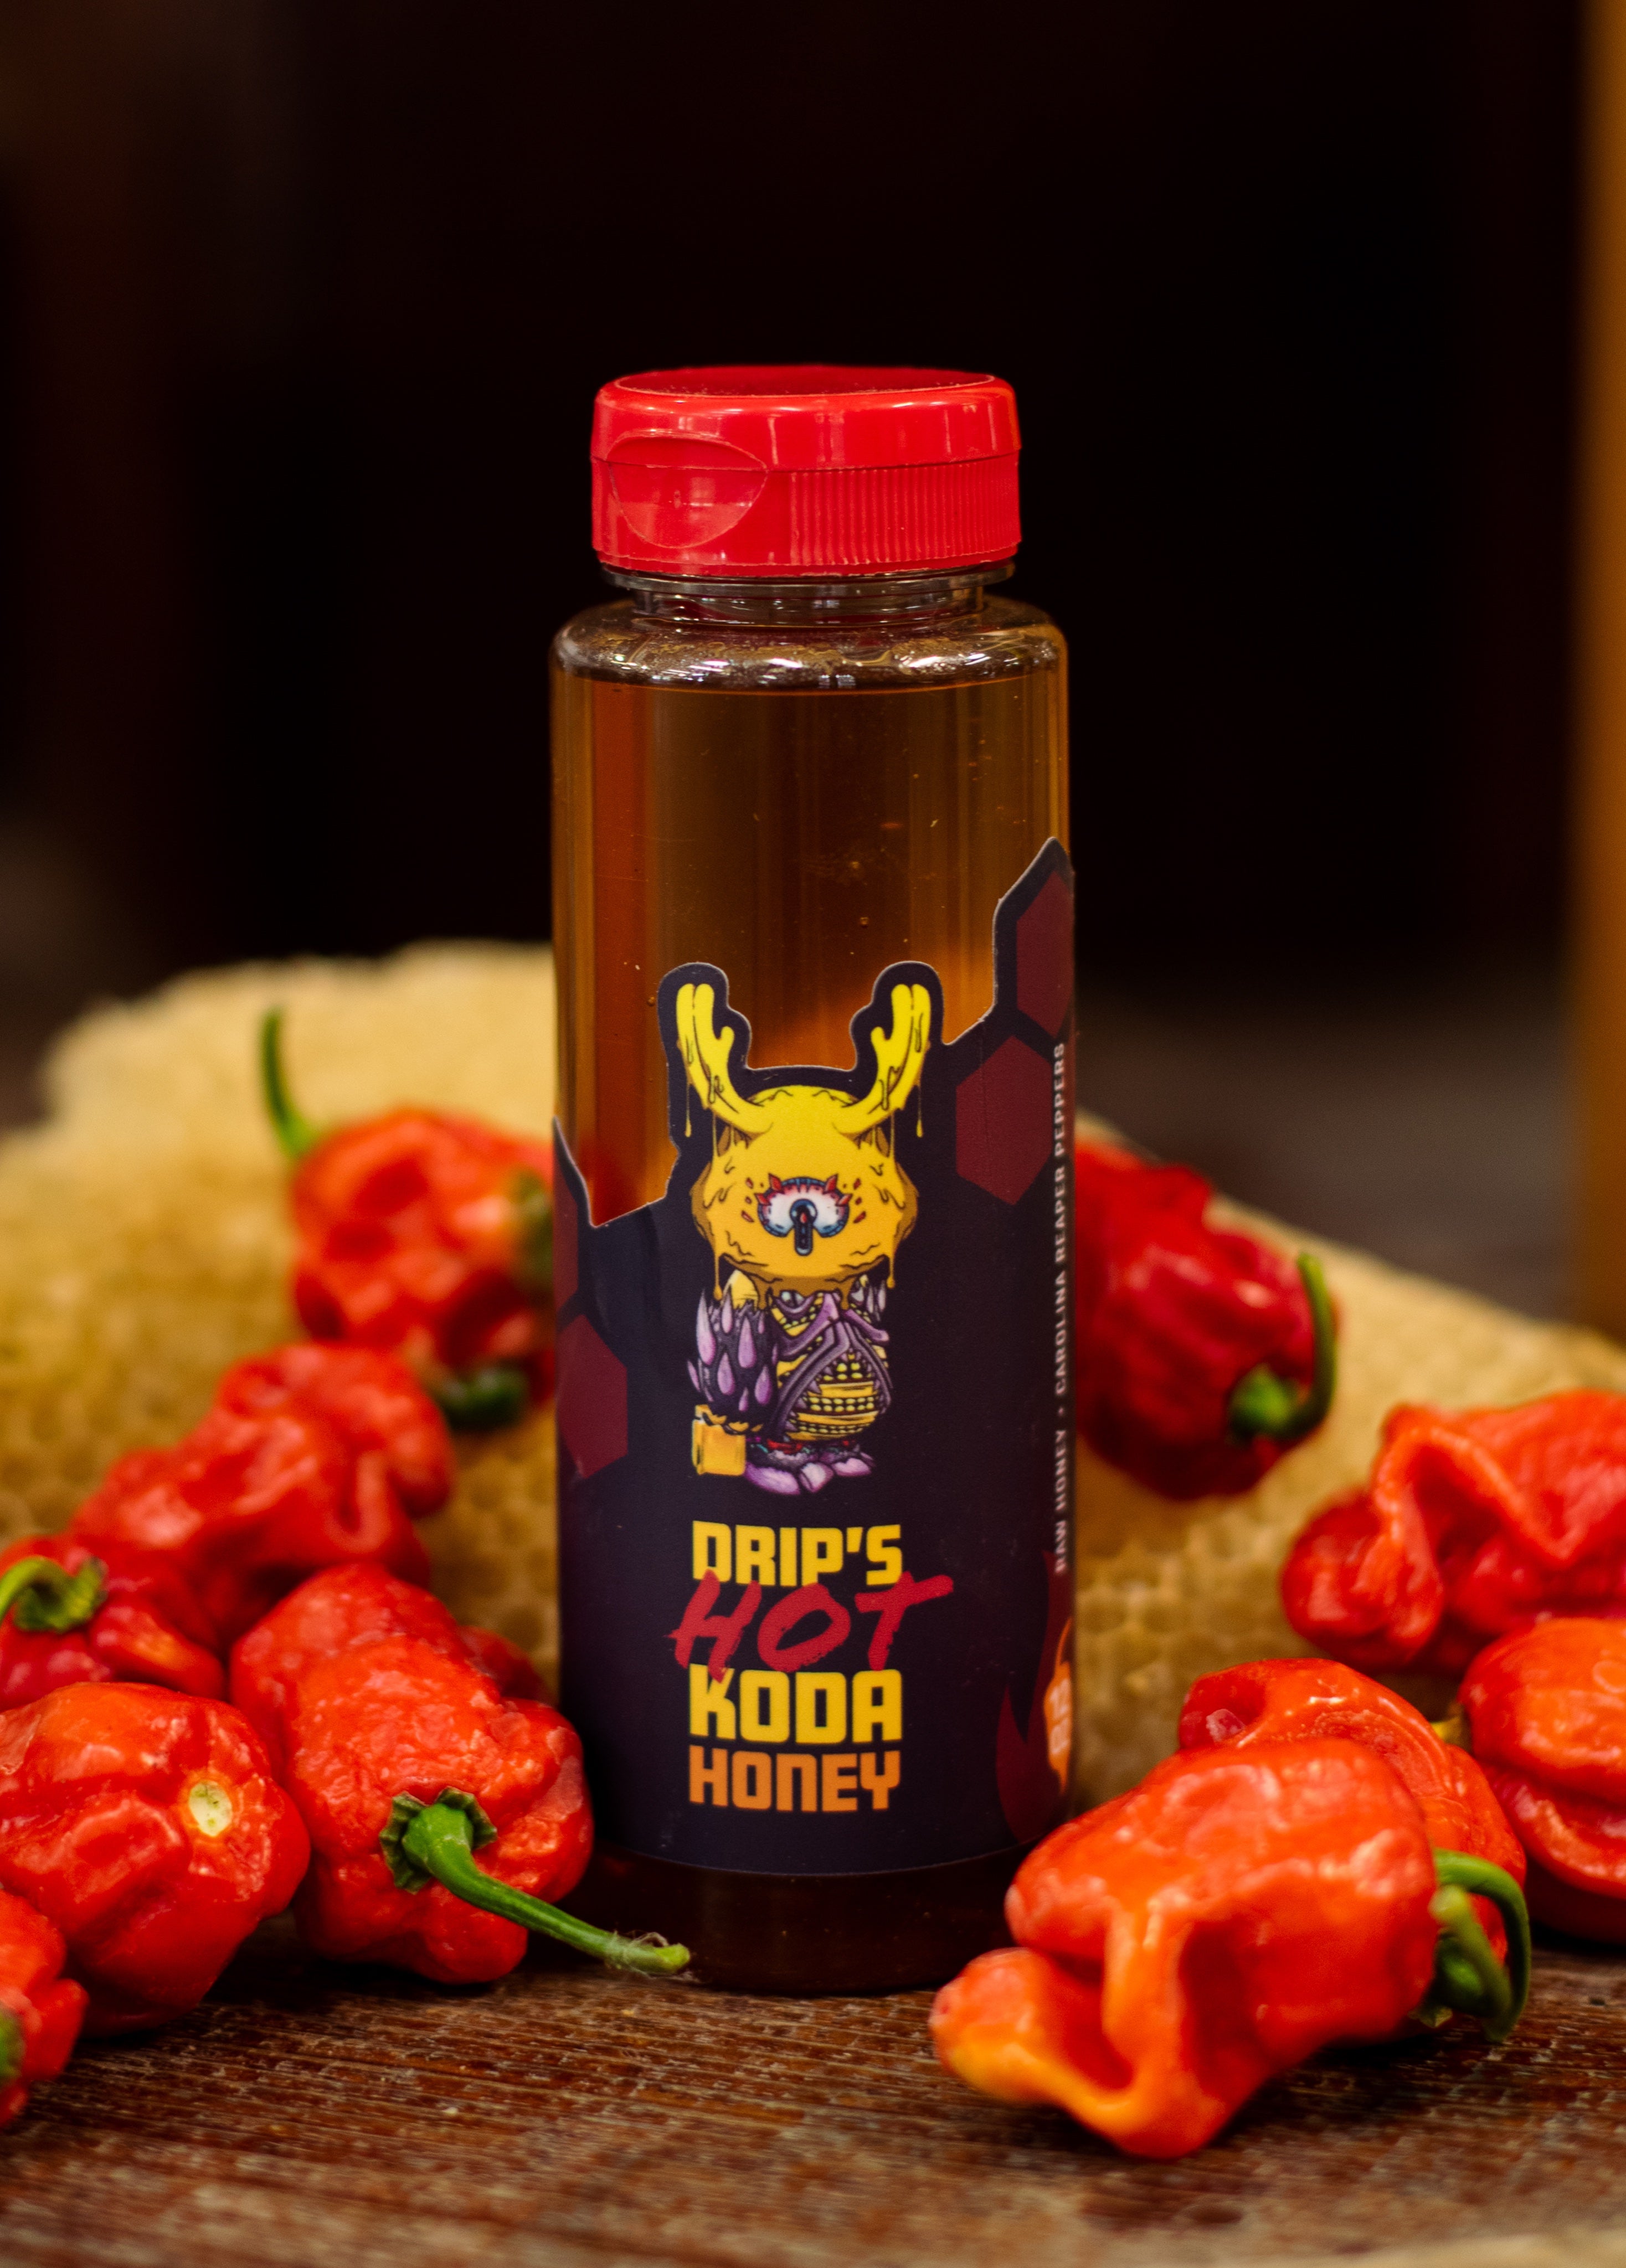 Drip's HOT Koda Honey 12oz